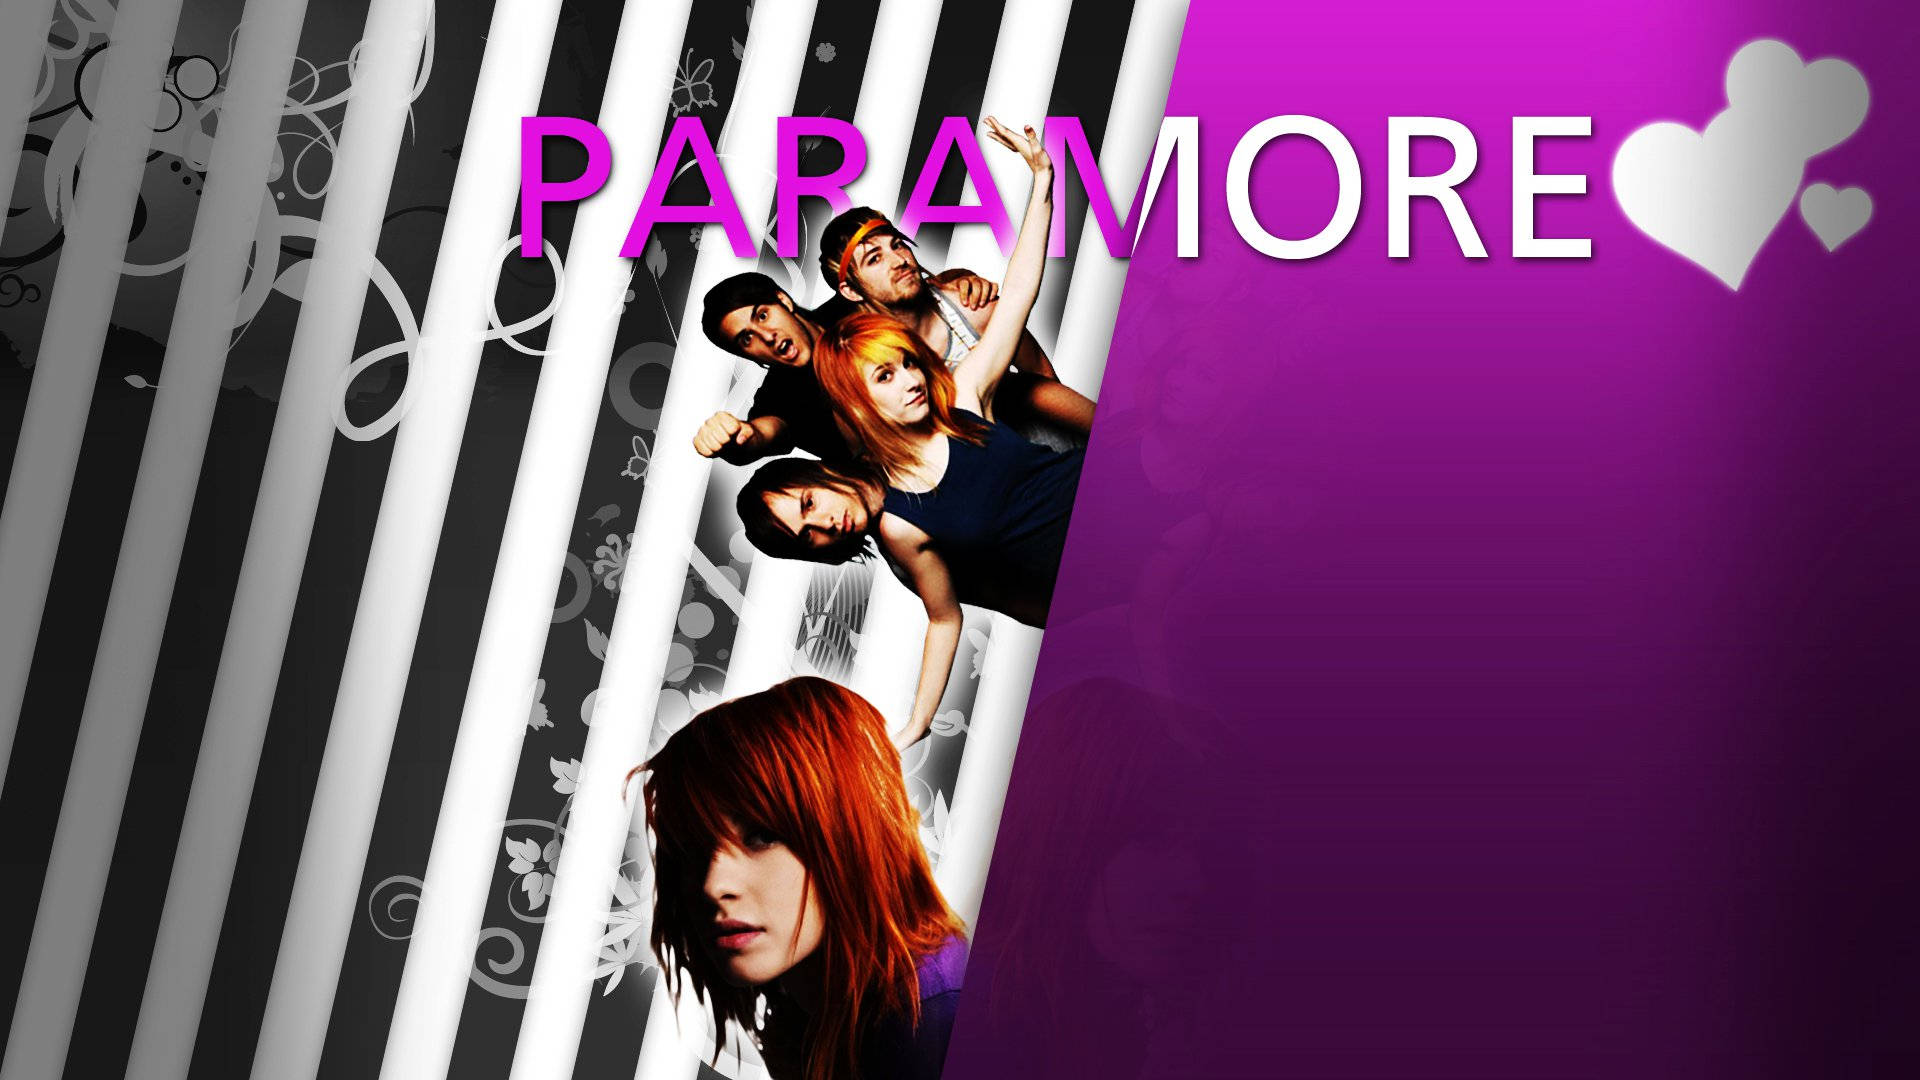 Paramore Band Graphic Fanart Poster wallpaper.